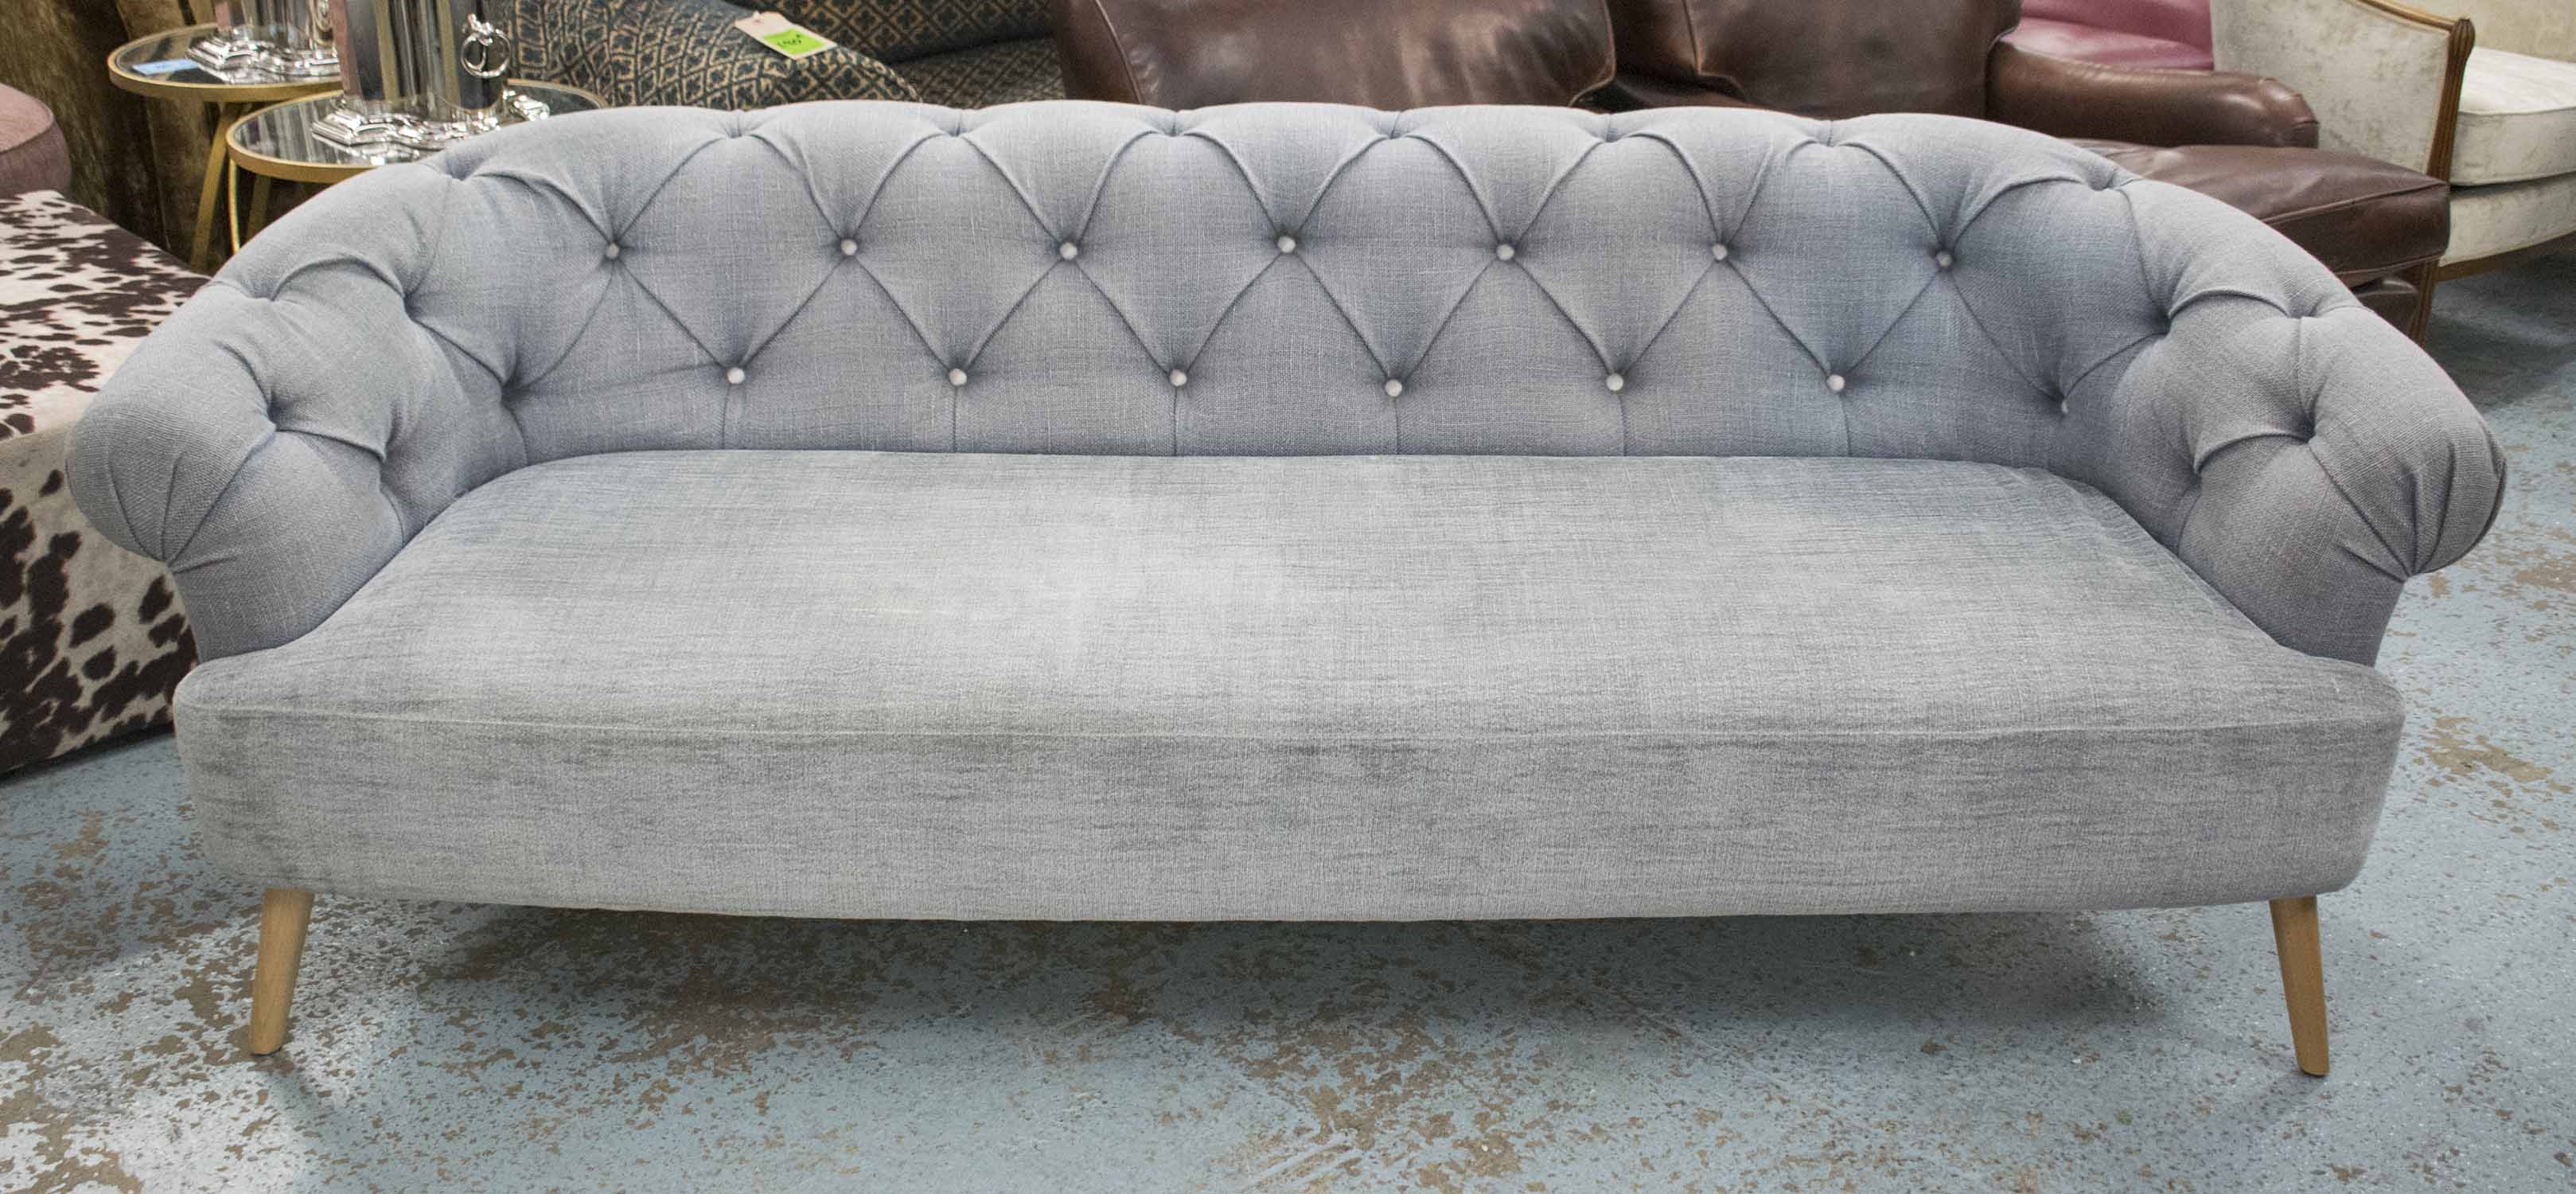 designers guild sofa beds